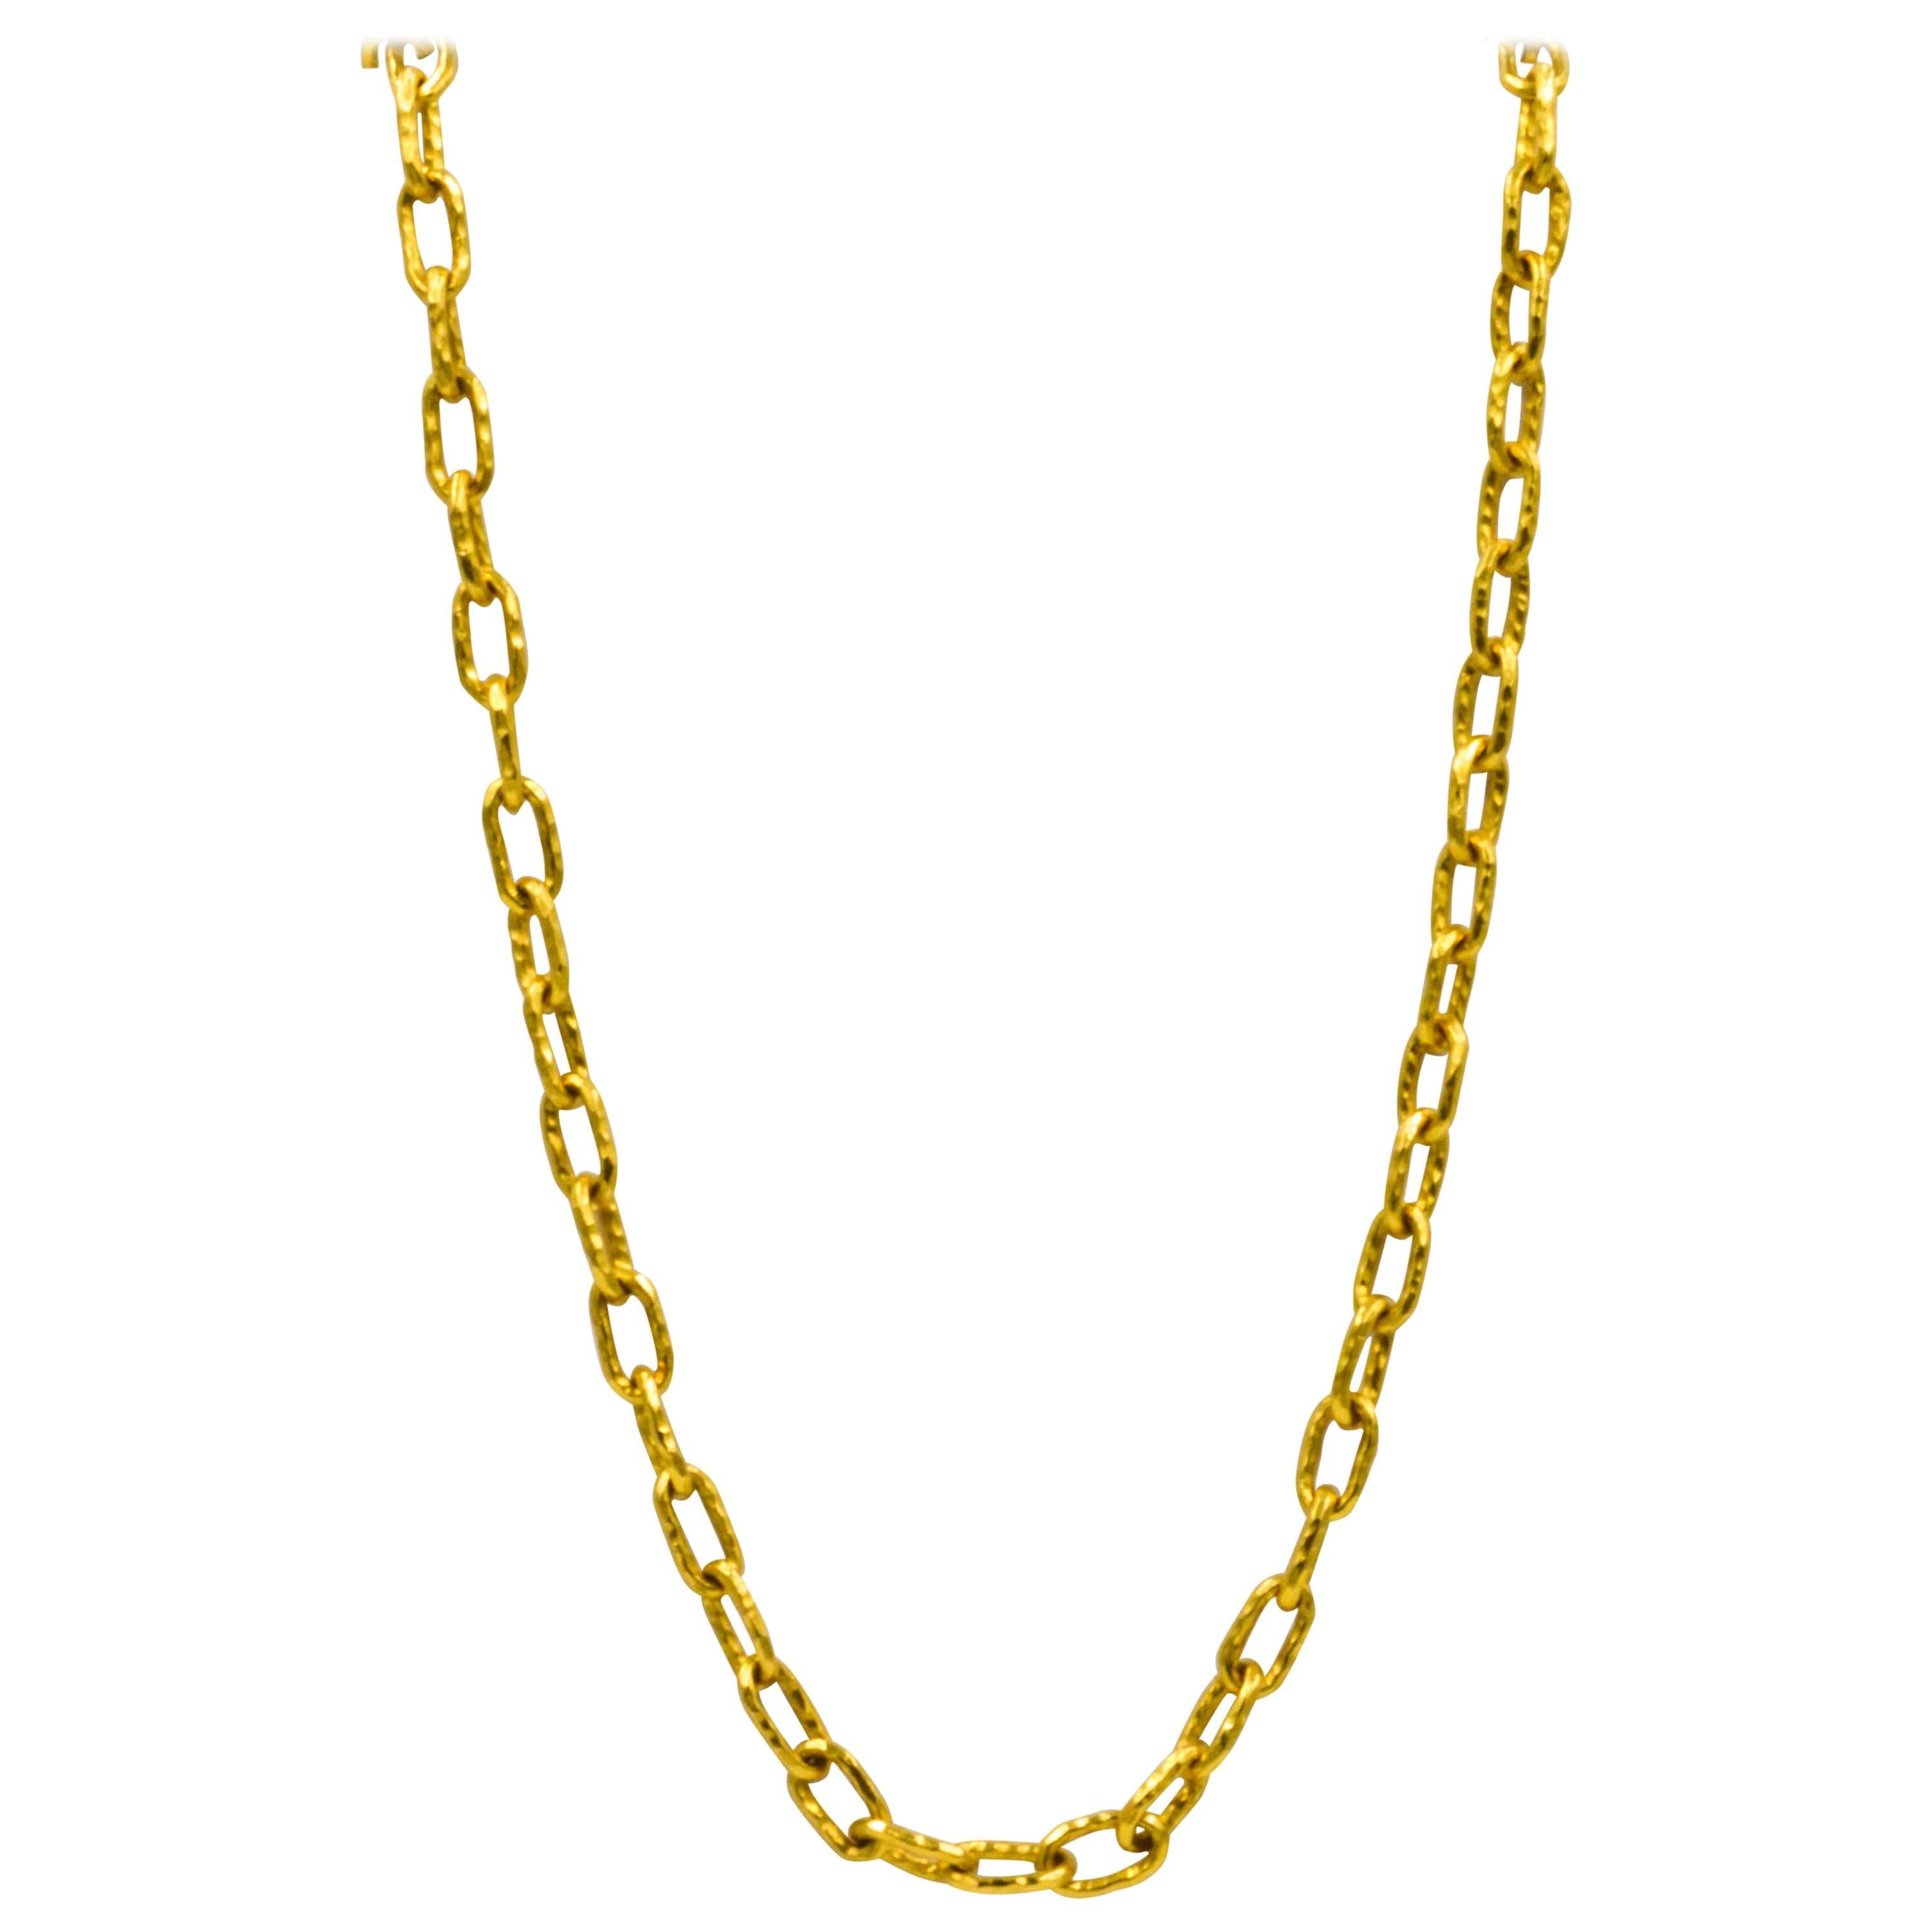 Jean Mahie 22 Karat Gold Cadene Link Chain